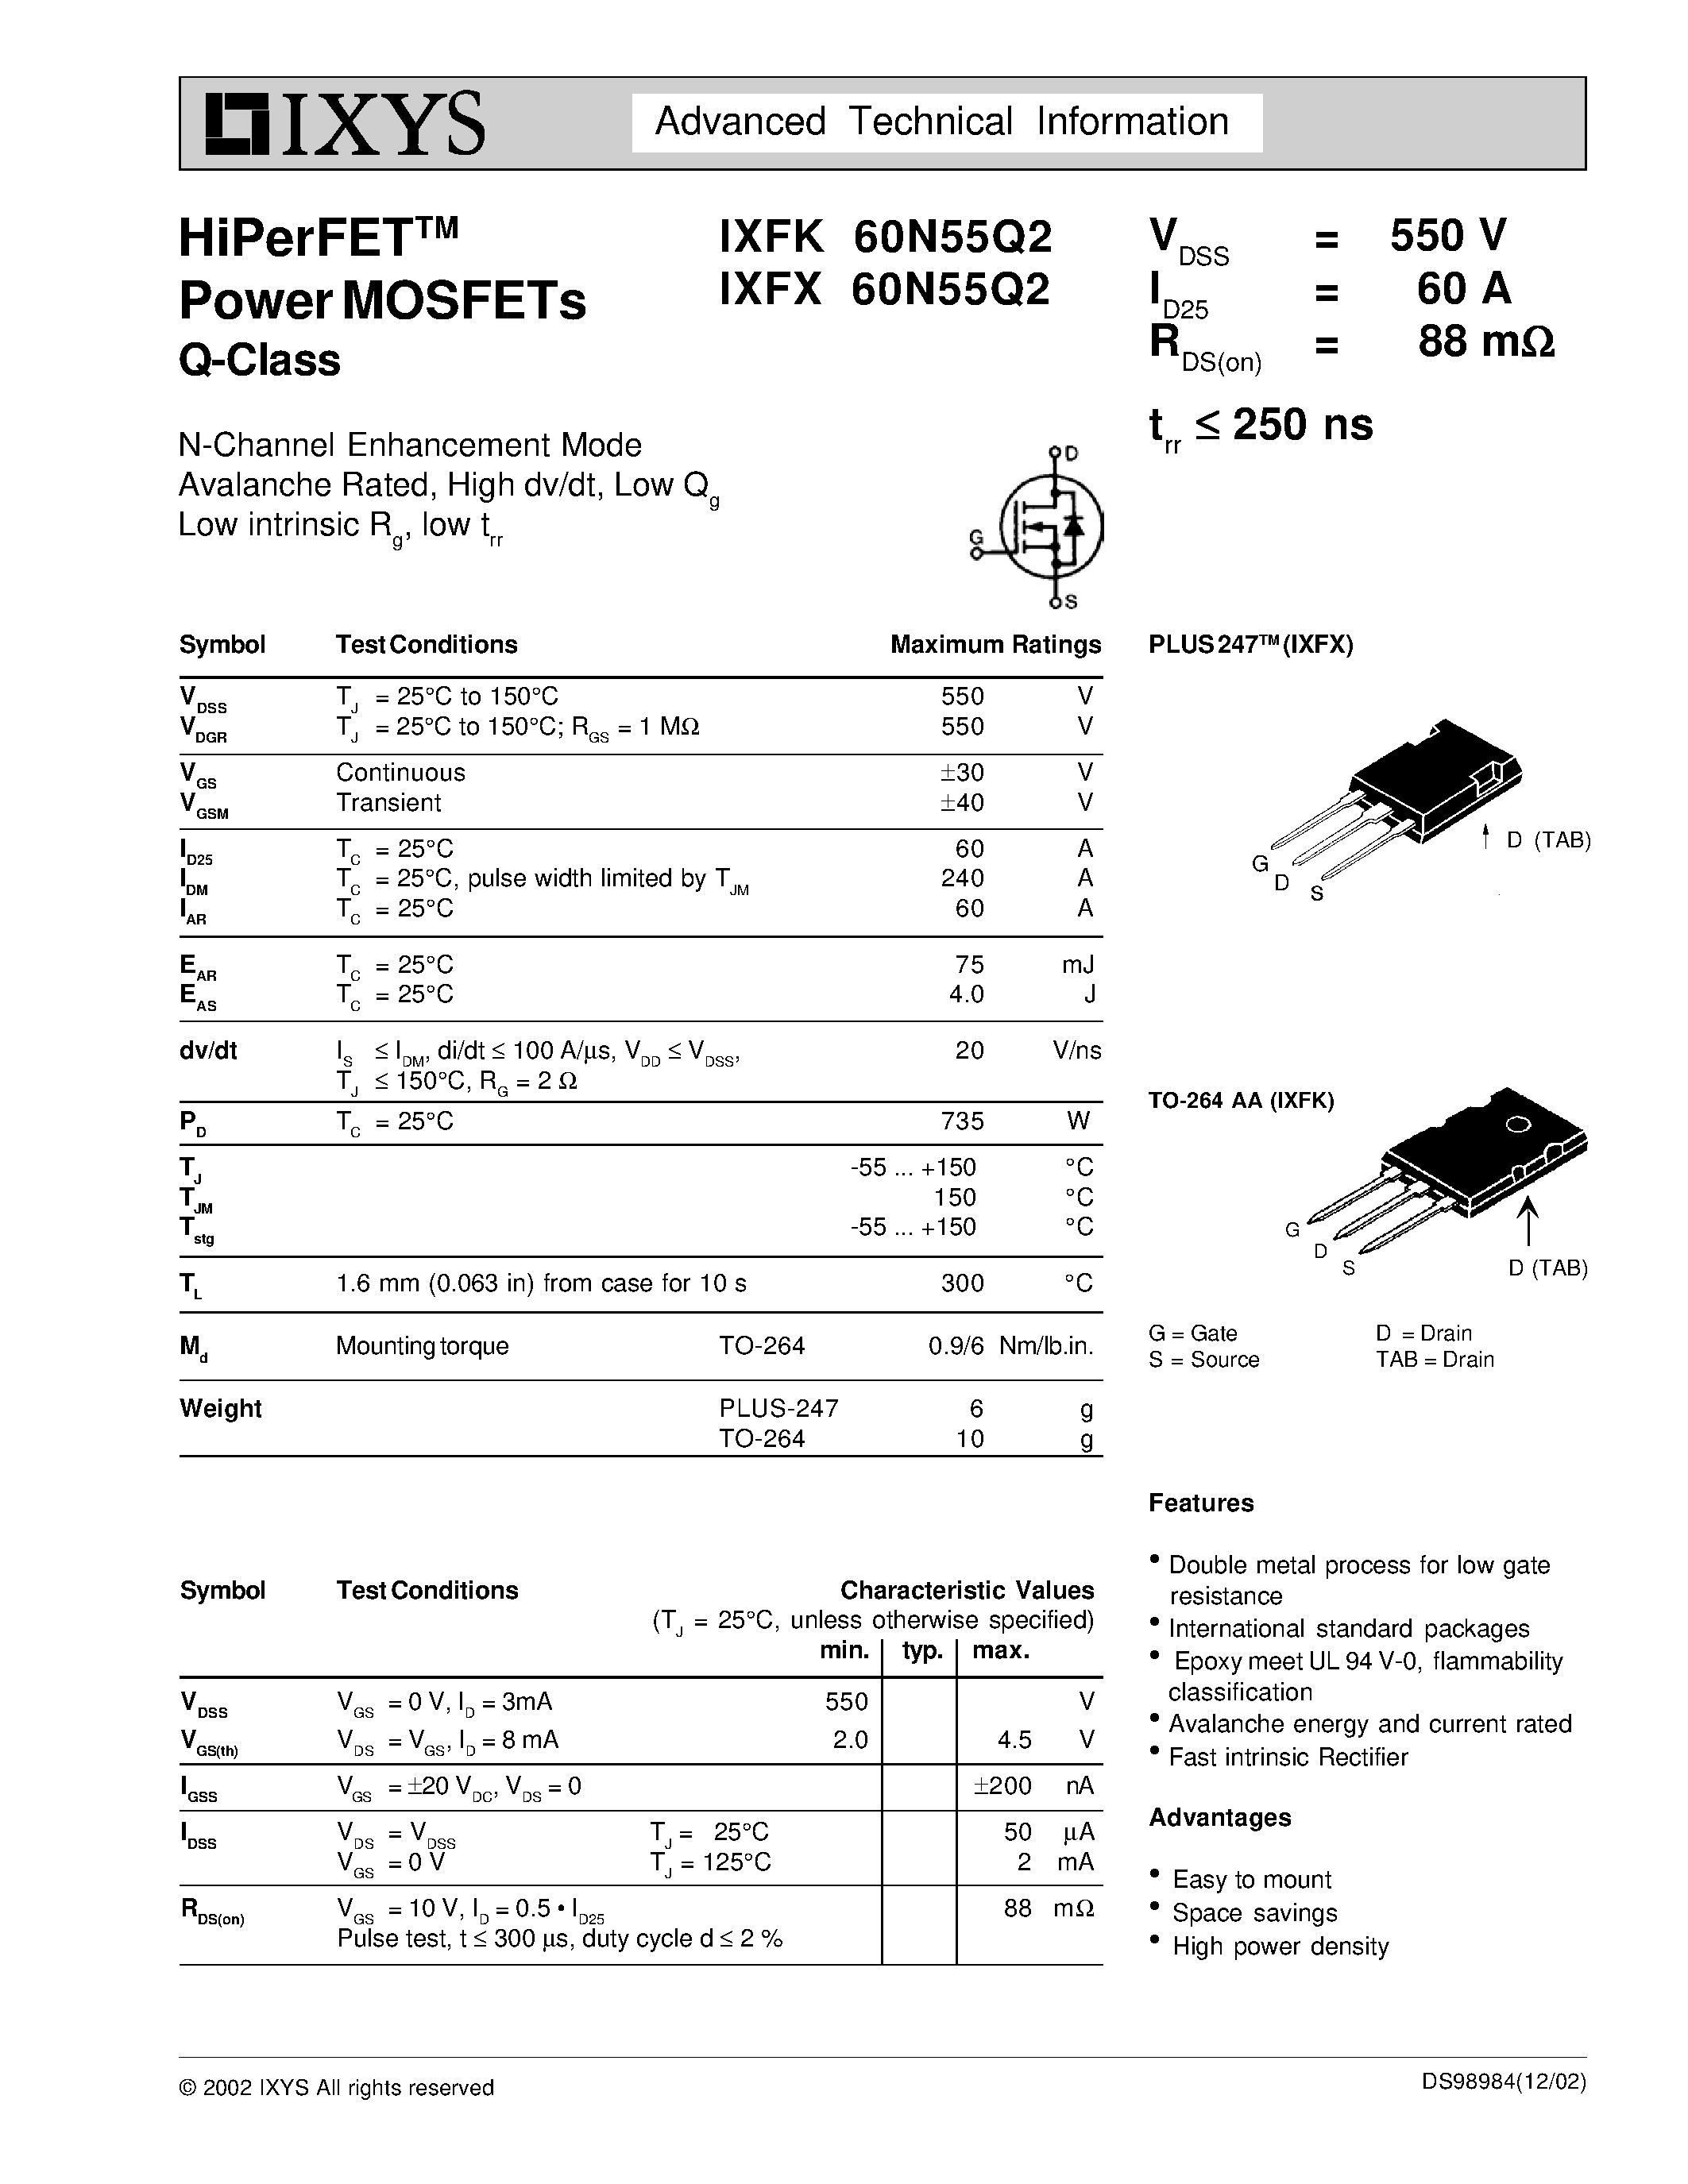 Datasheet IXFX60N55Q2 - HiPerFET Power MOSFETs Q-Class page 1